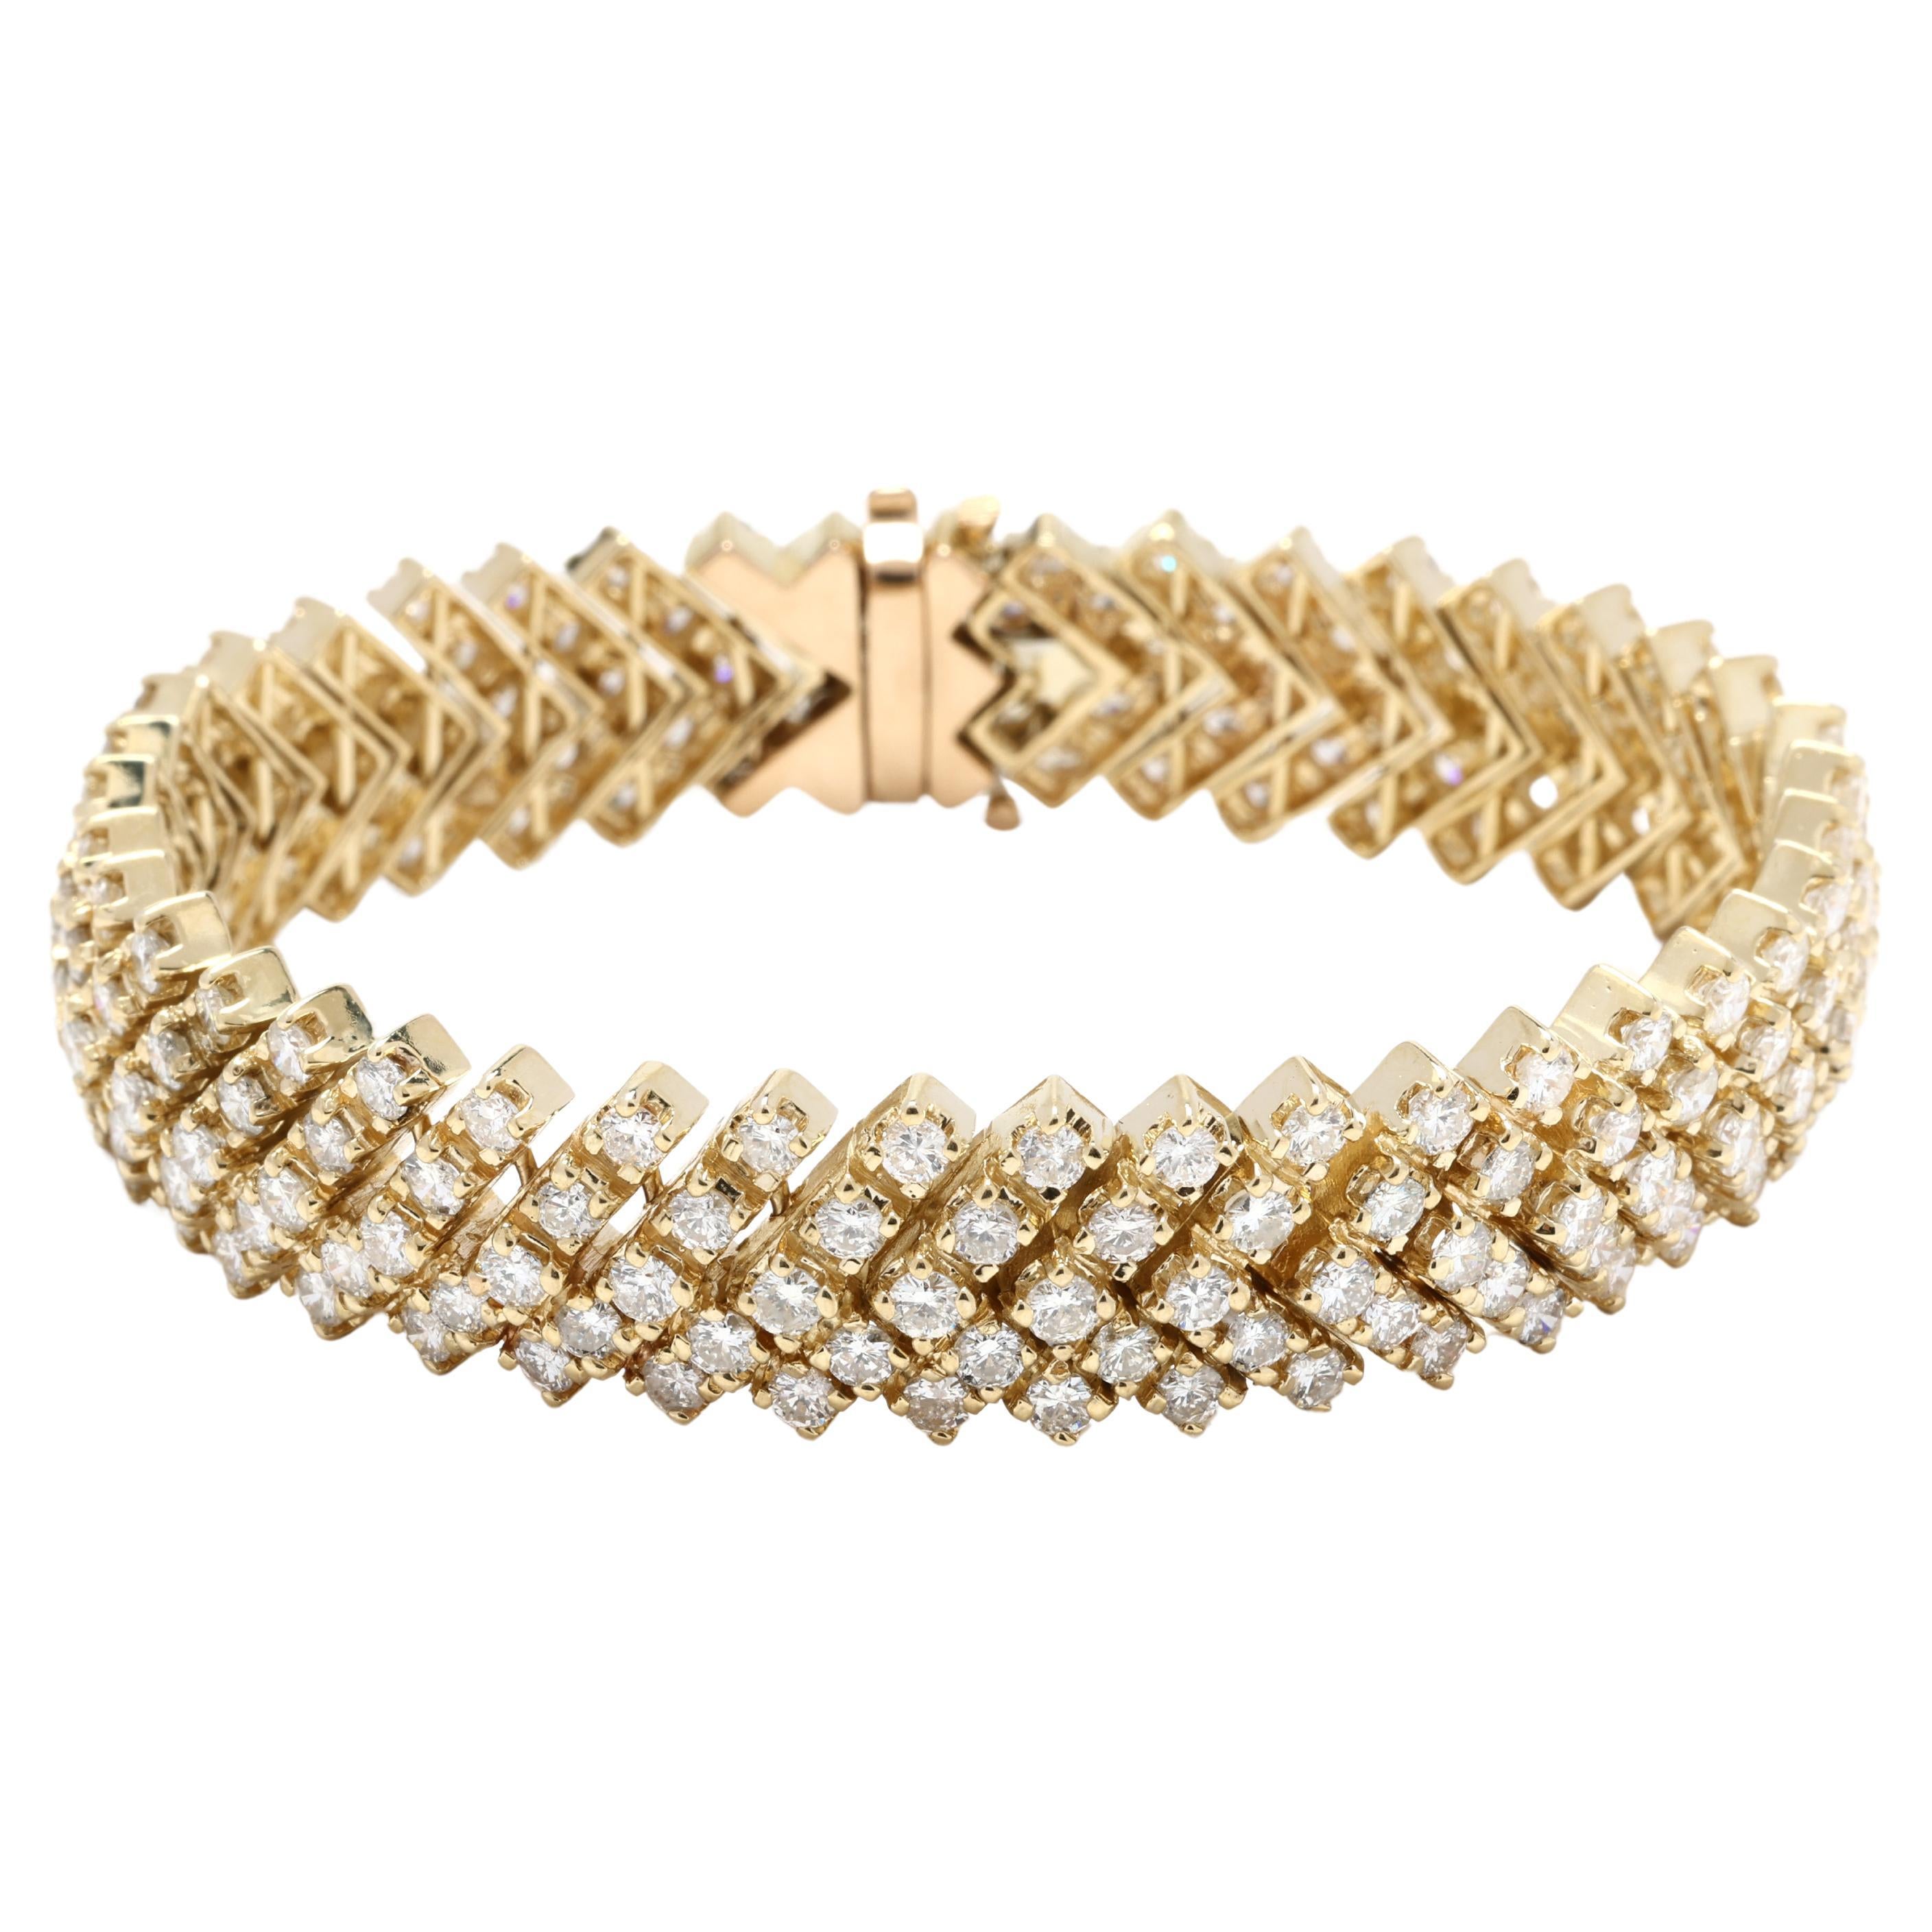 10ctw Diamond Link Bracelet, 14k Yellow Gold, Length 7 Inch For Sale